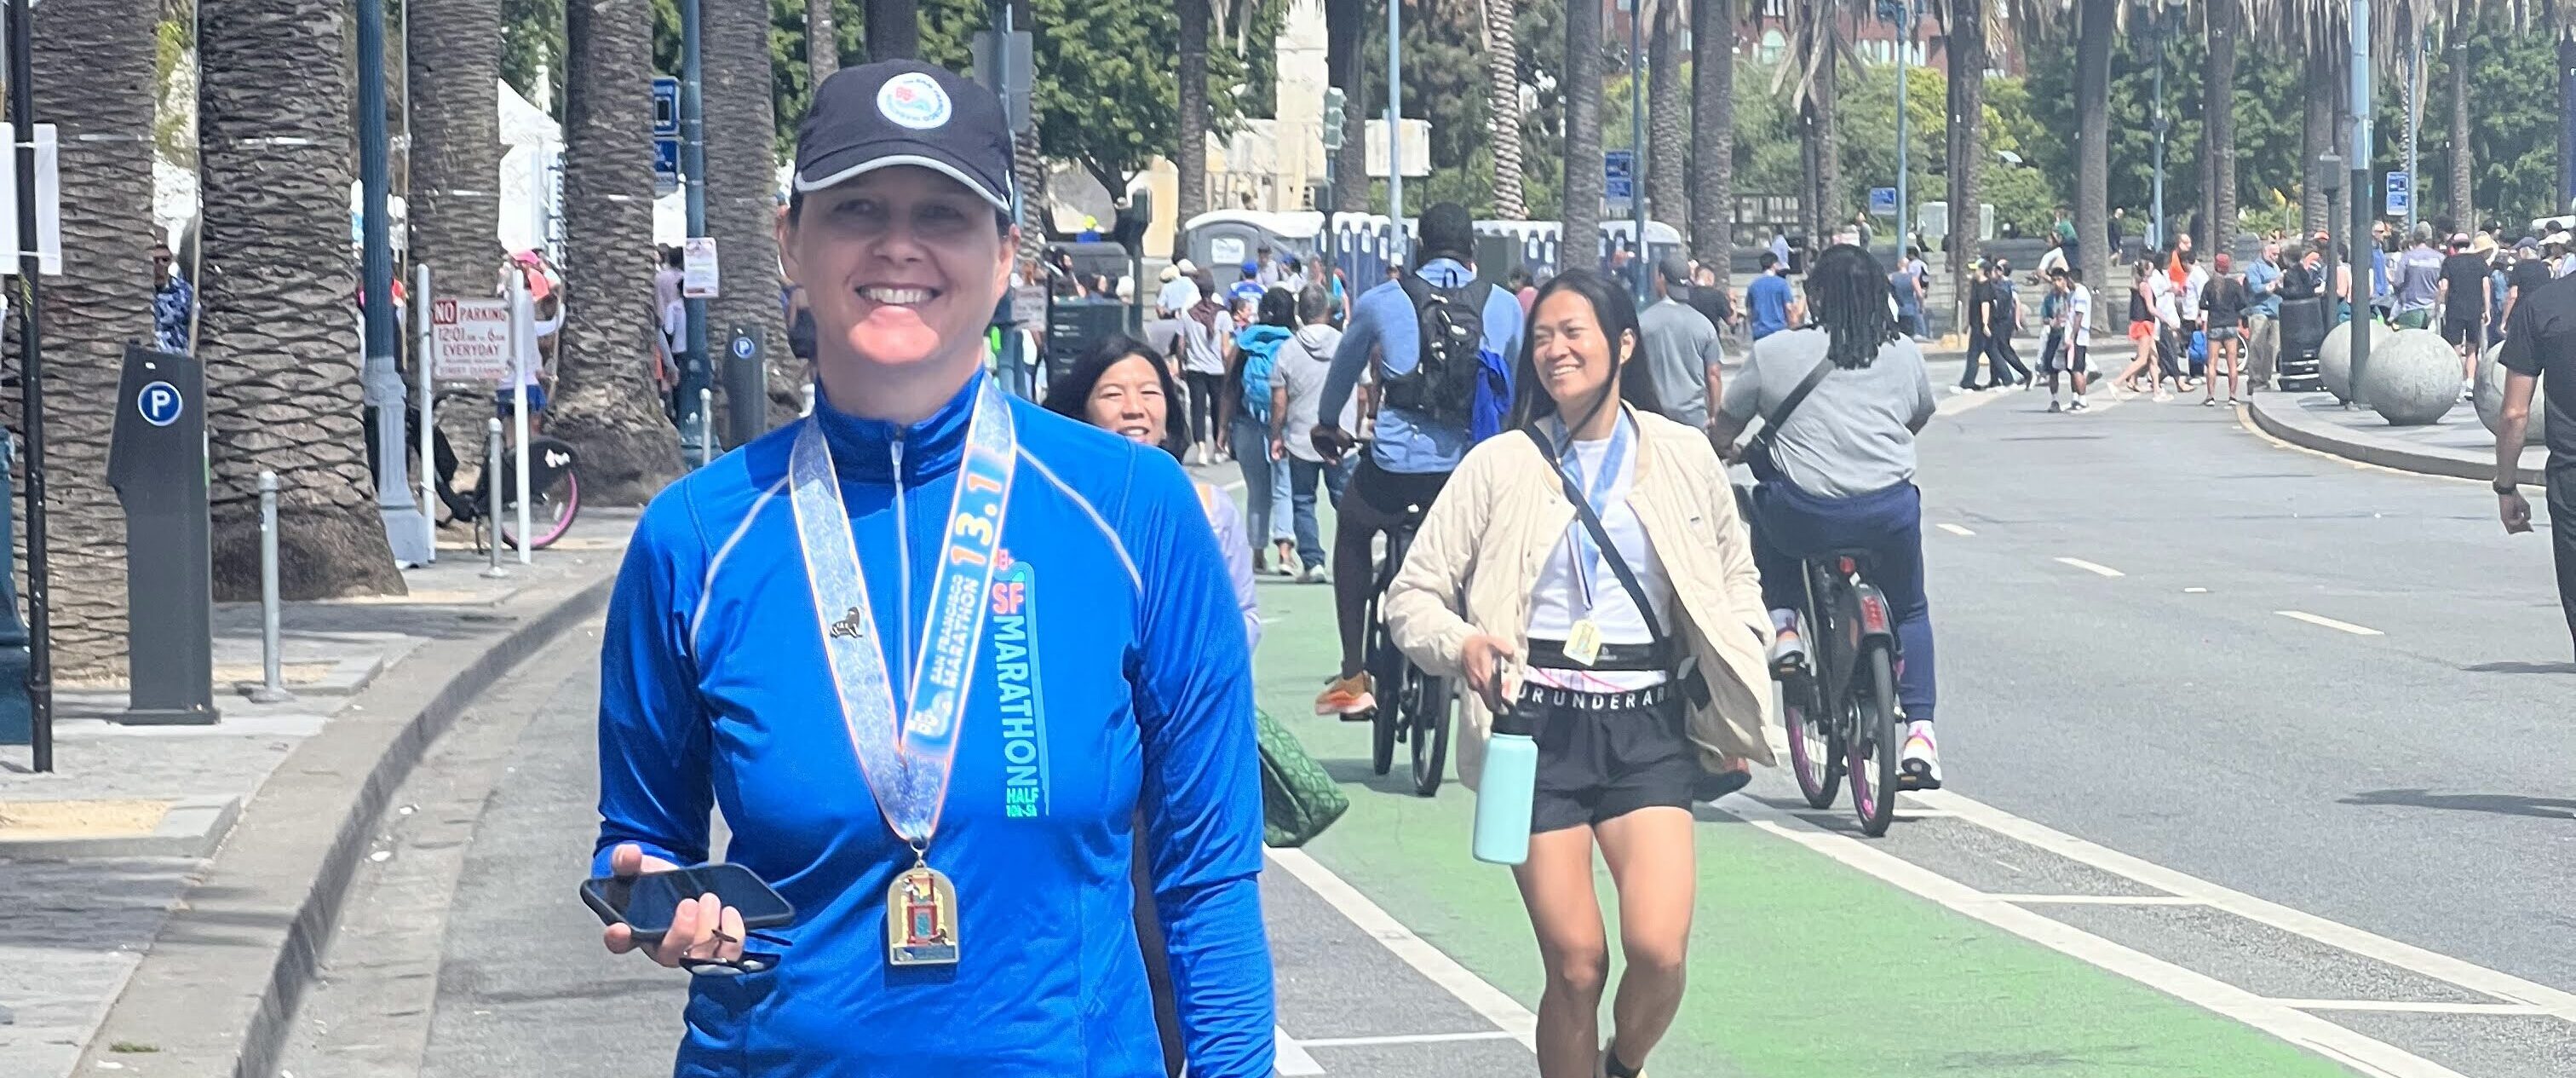 Runner Spotlight star Lucie Nestrasilova waslking down the road with her dream race San Francisco Marathon medal around her neck